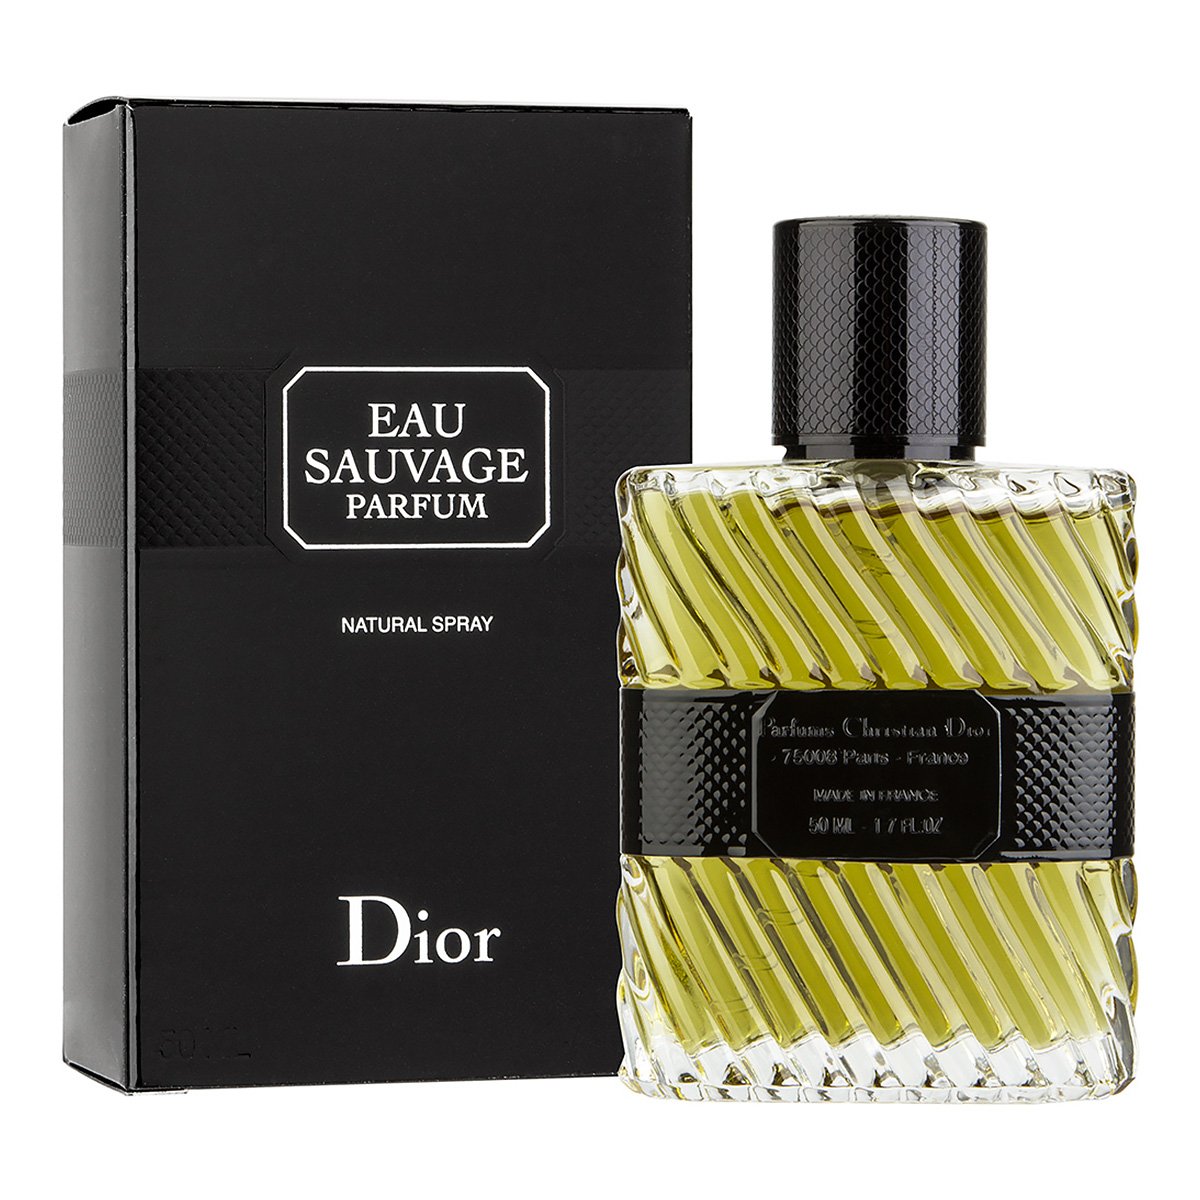 Купить Парфюмерная вода Dior, Dior Eau Sauvage Parfum 100.0ml тестер, Франция